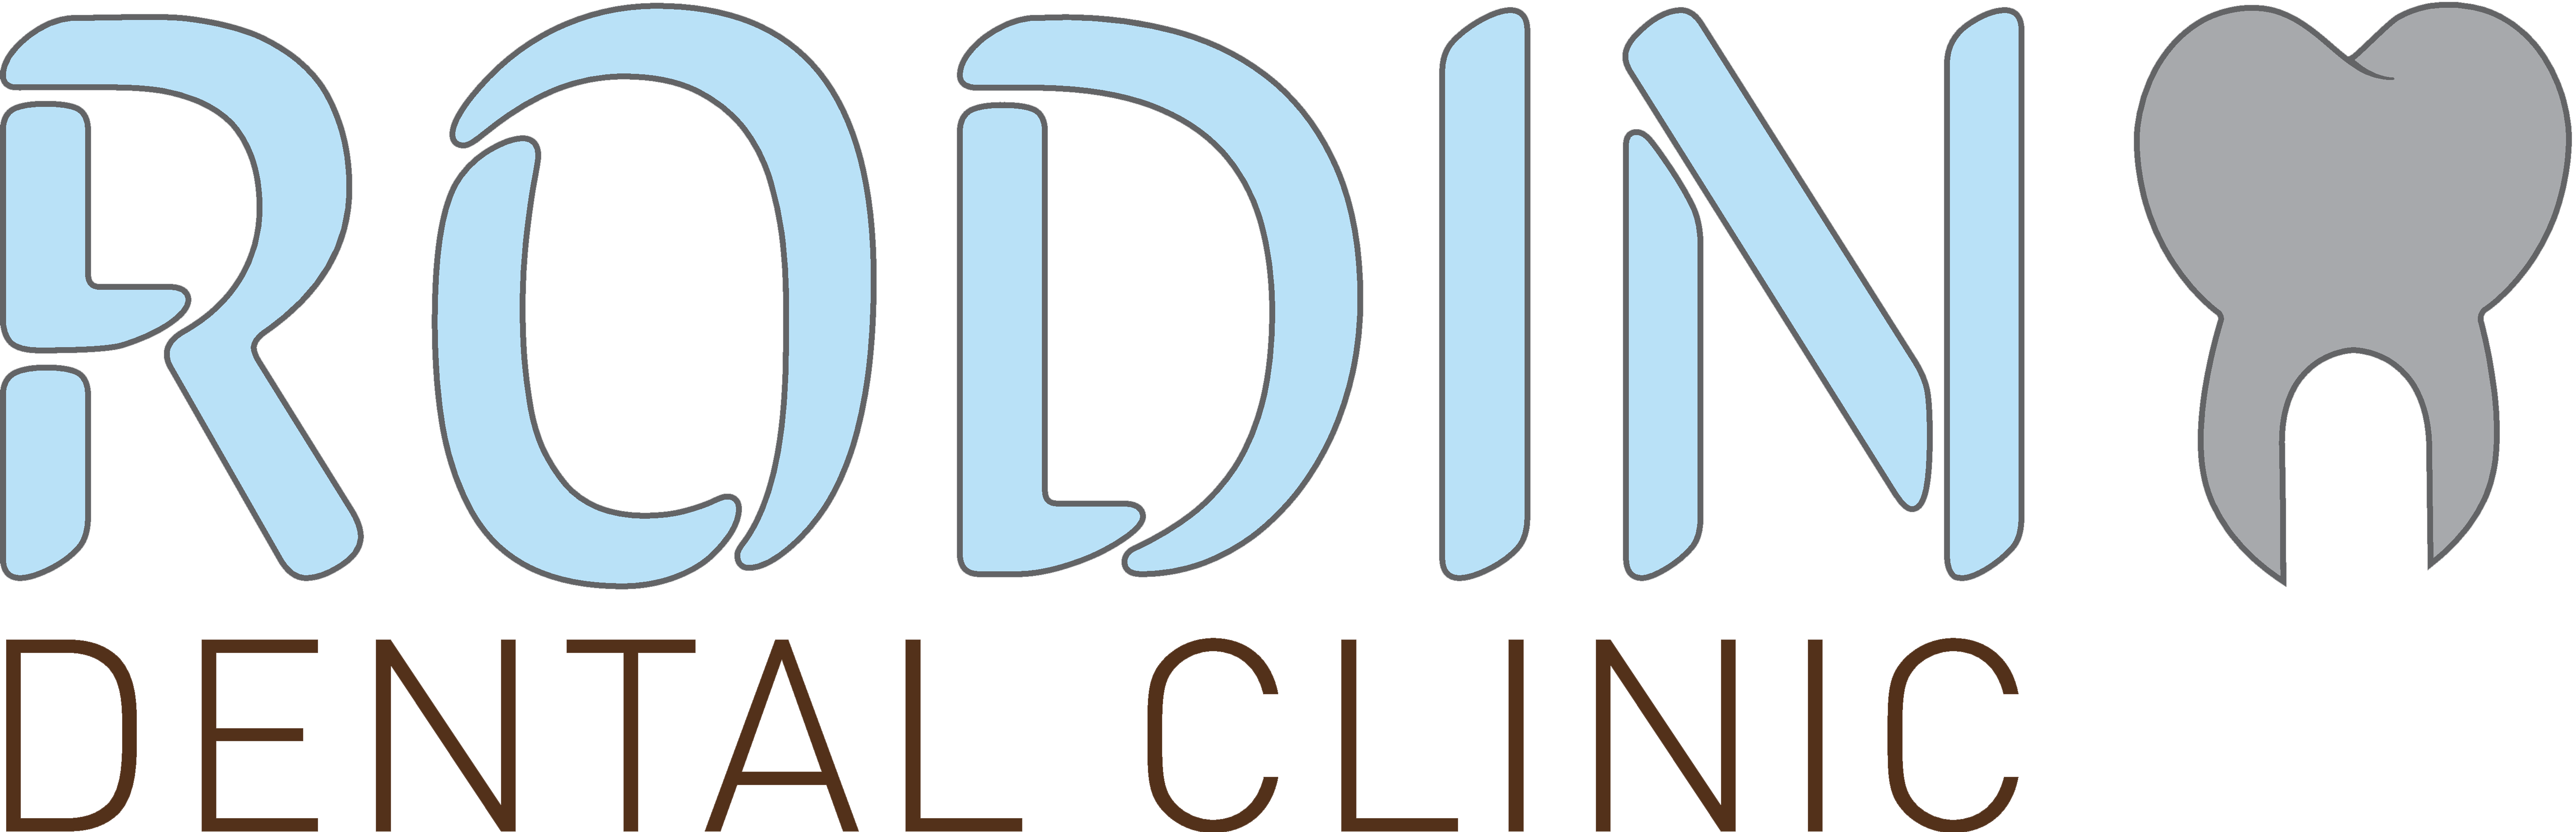 Rodin Dental Clinic